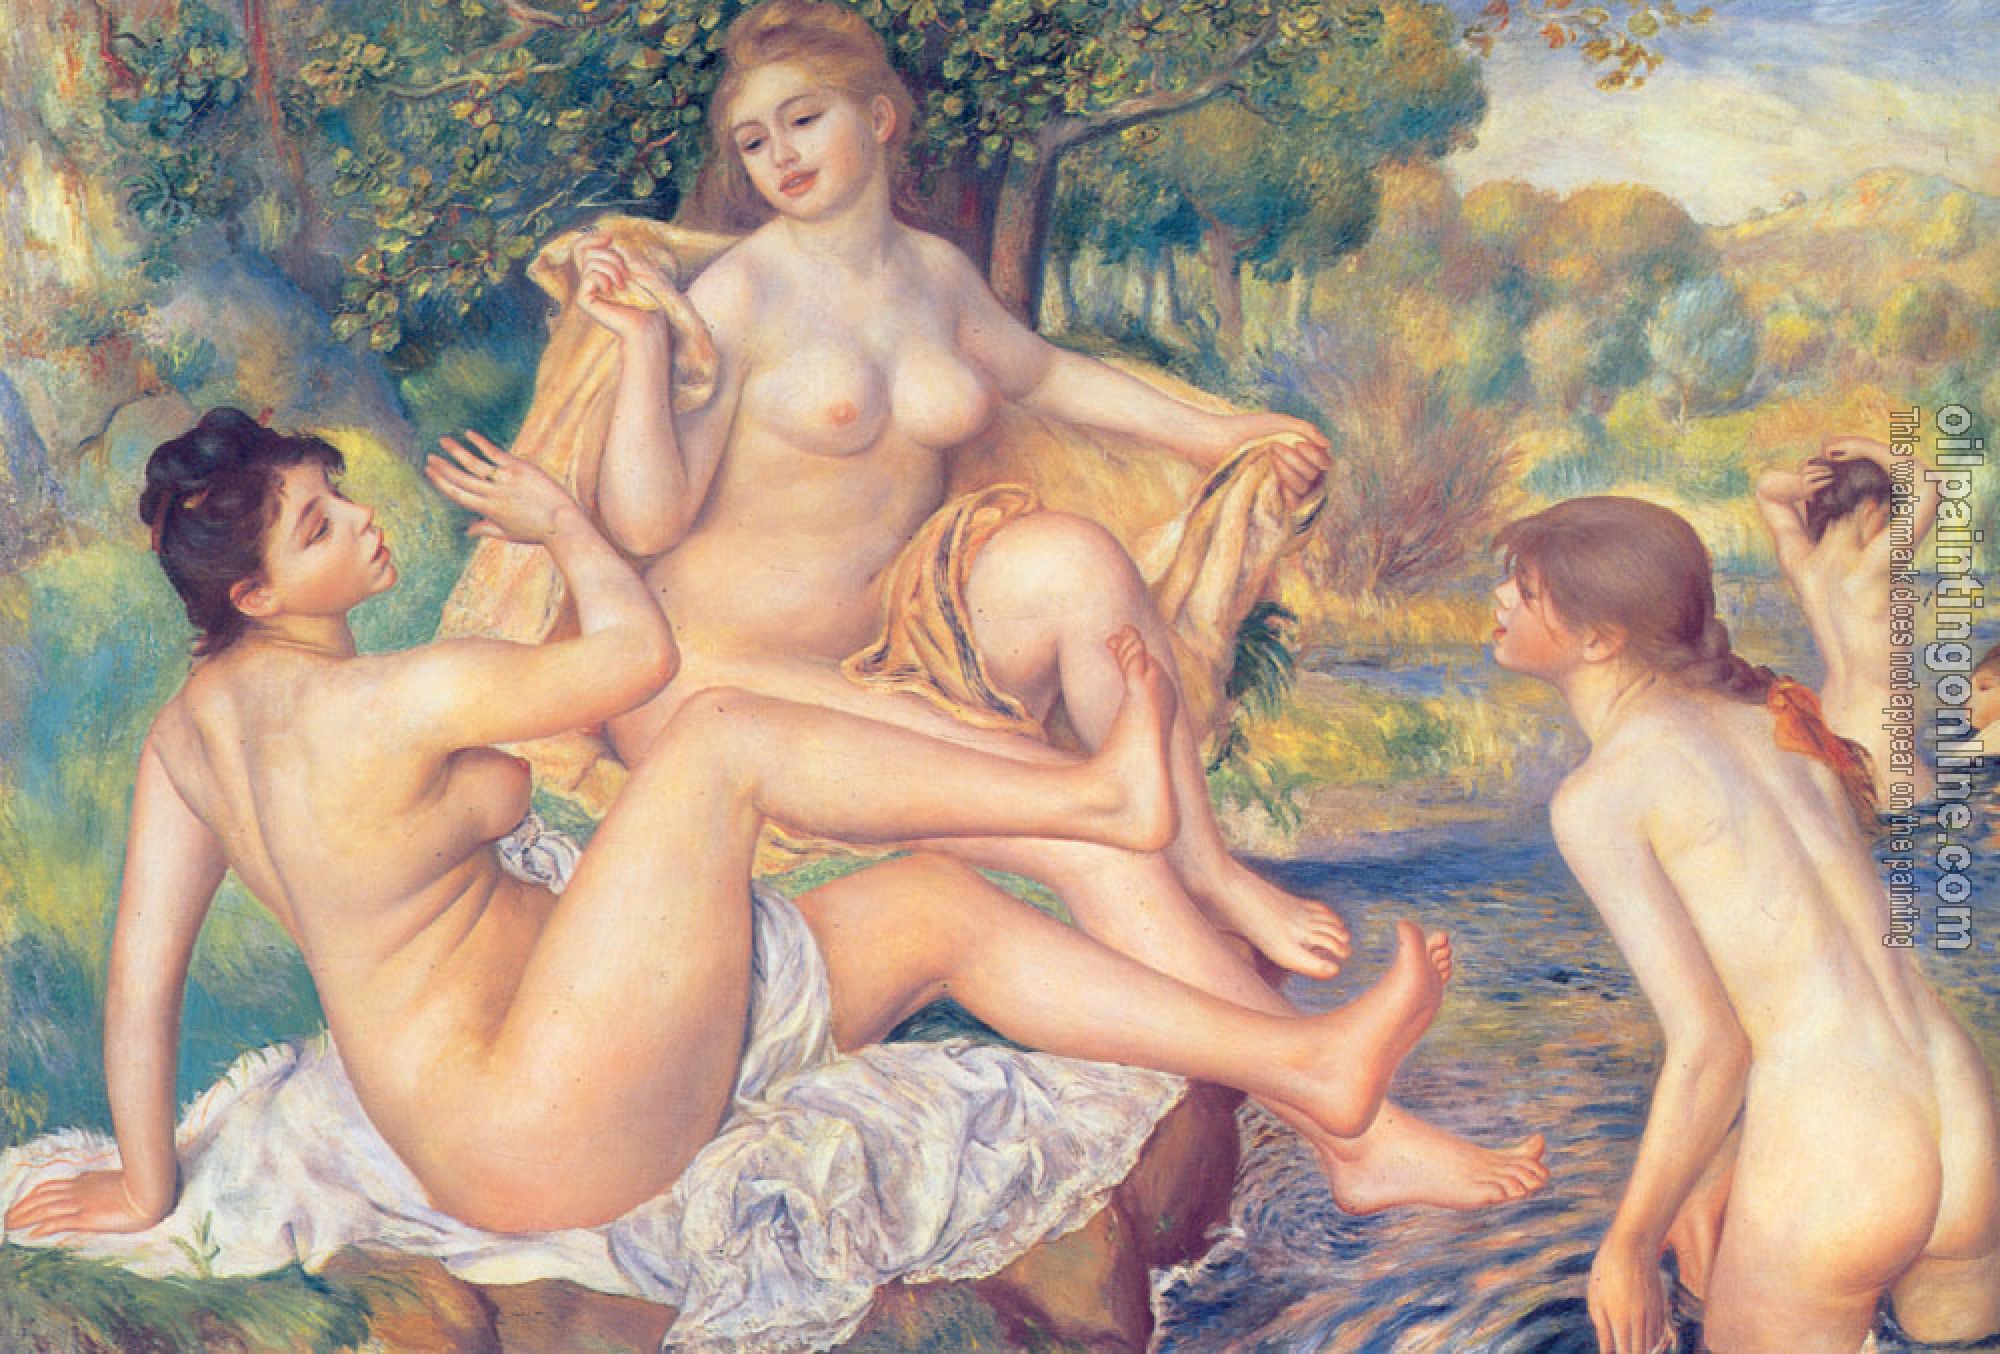 Renoir, Pierre Auguste - The Large Bathers